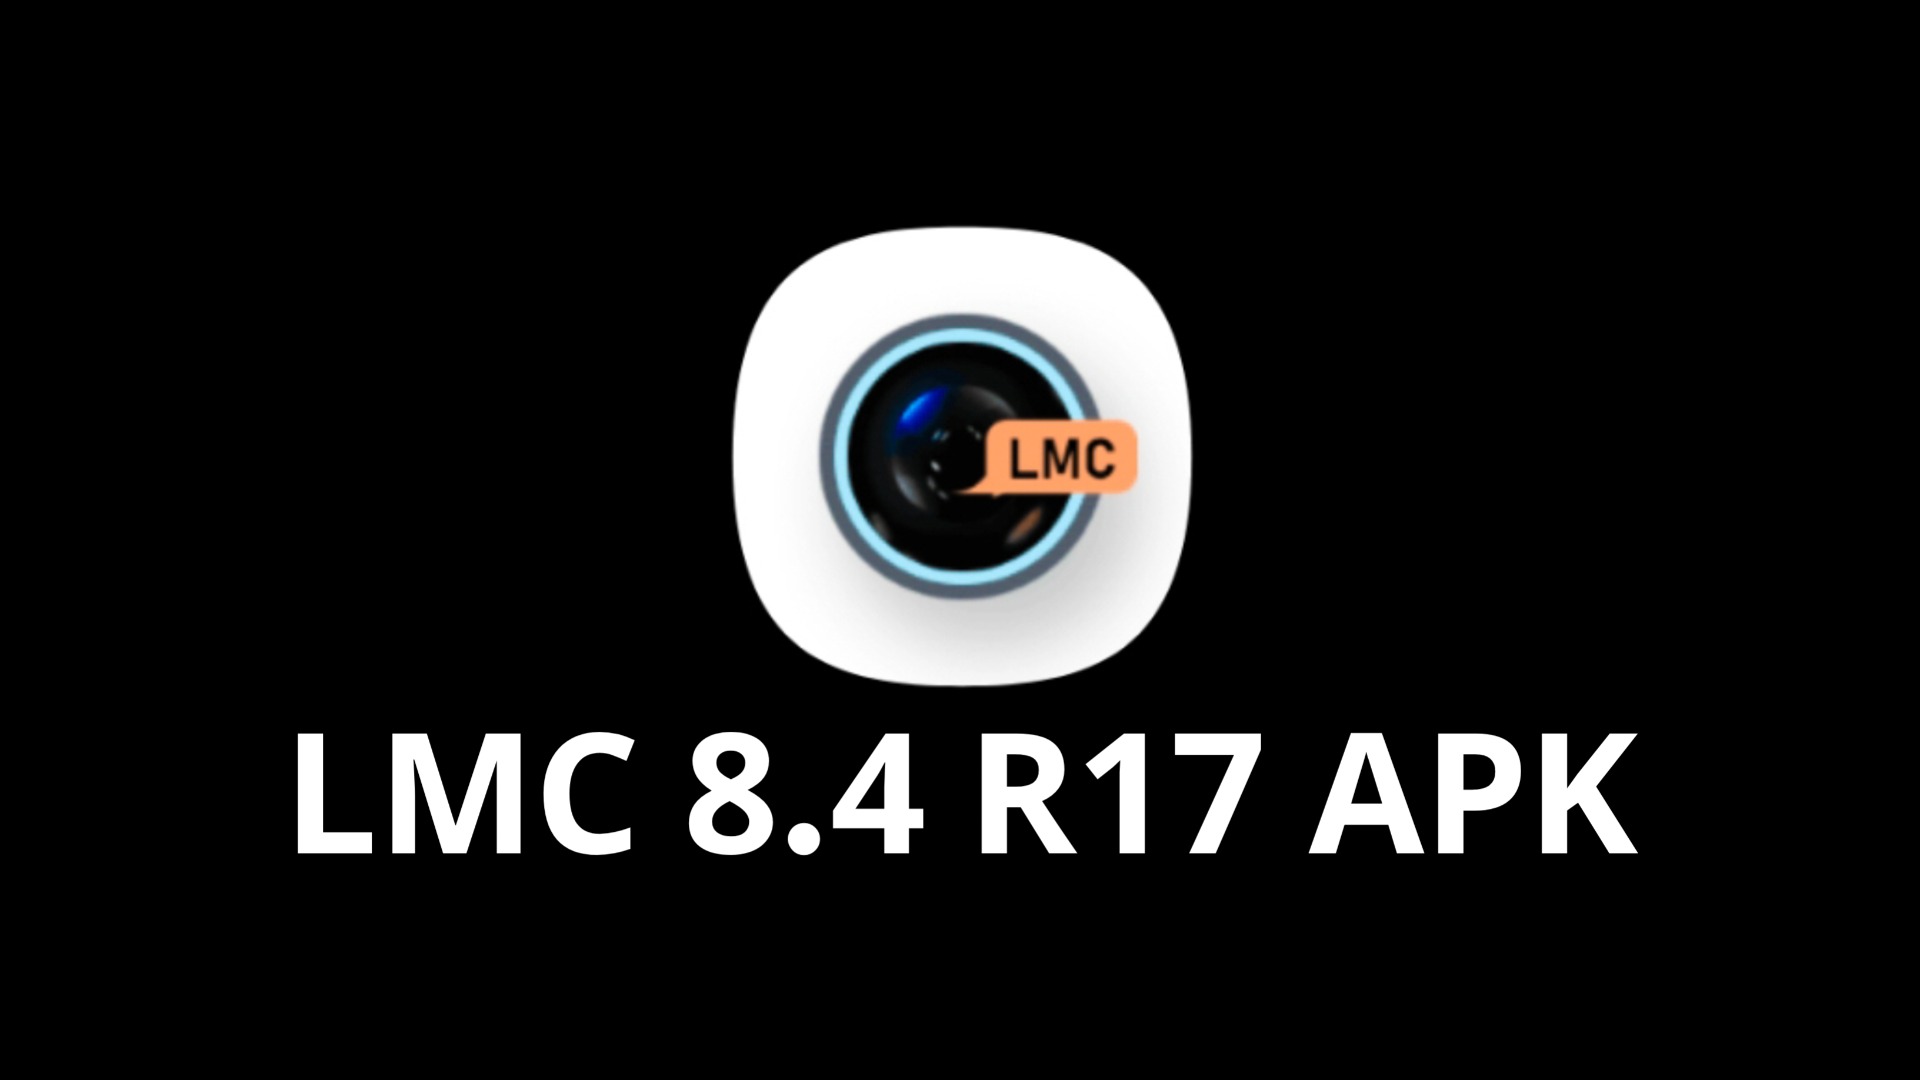 Lmc 8.4 R17 Apk App